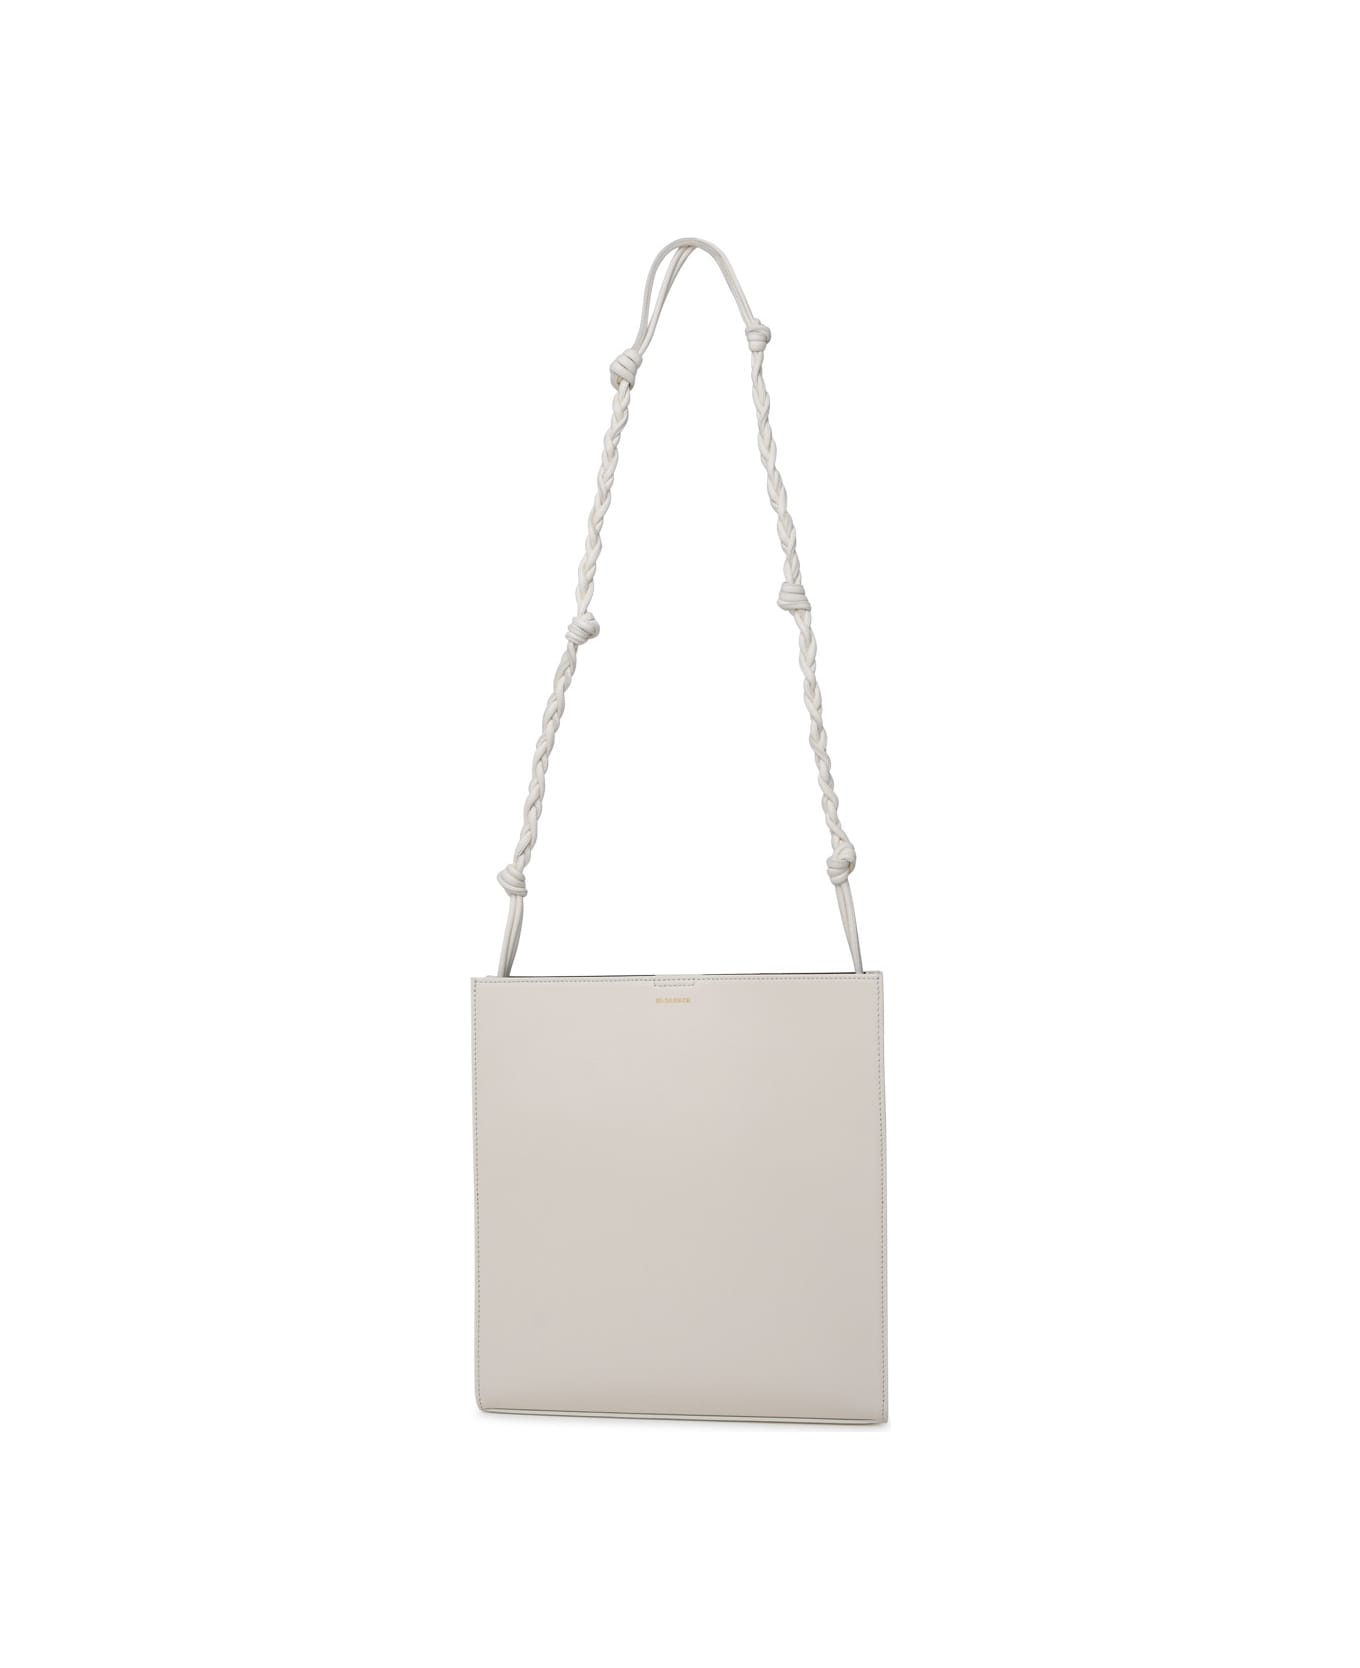 Jil Sander Tangle Bag In White Leather - White